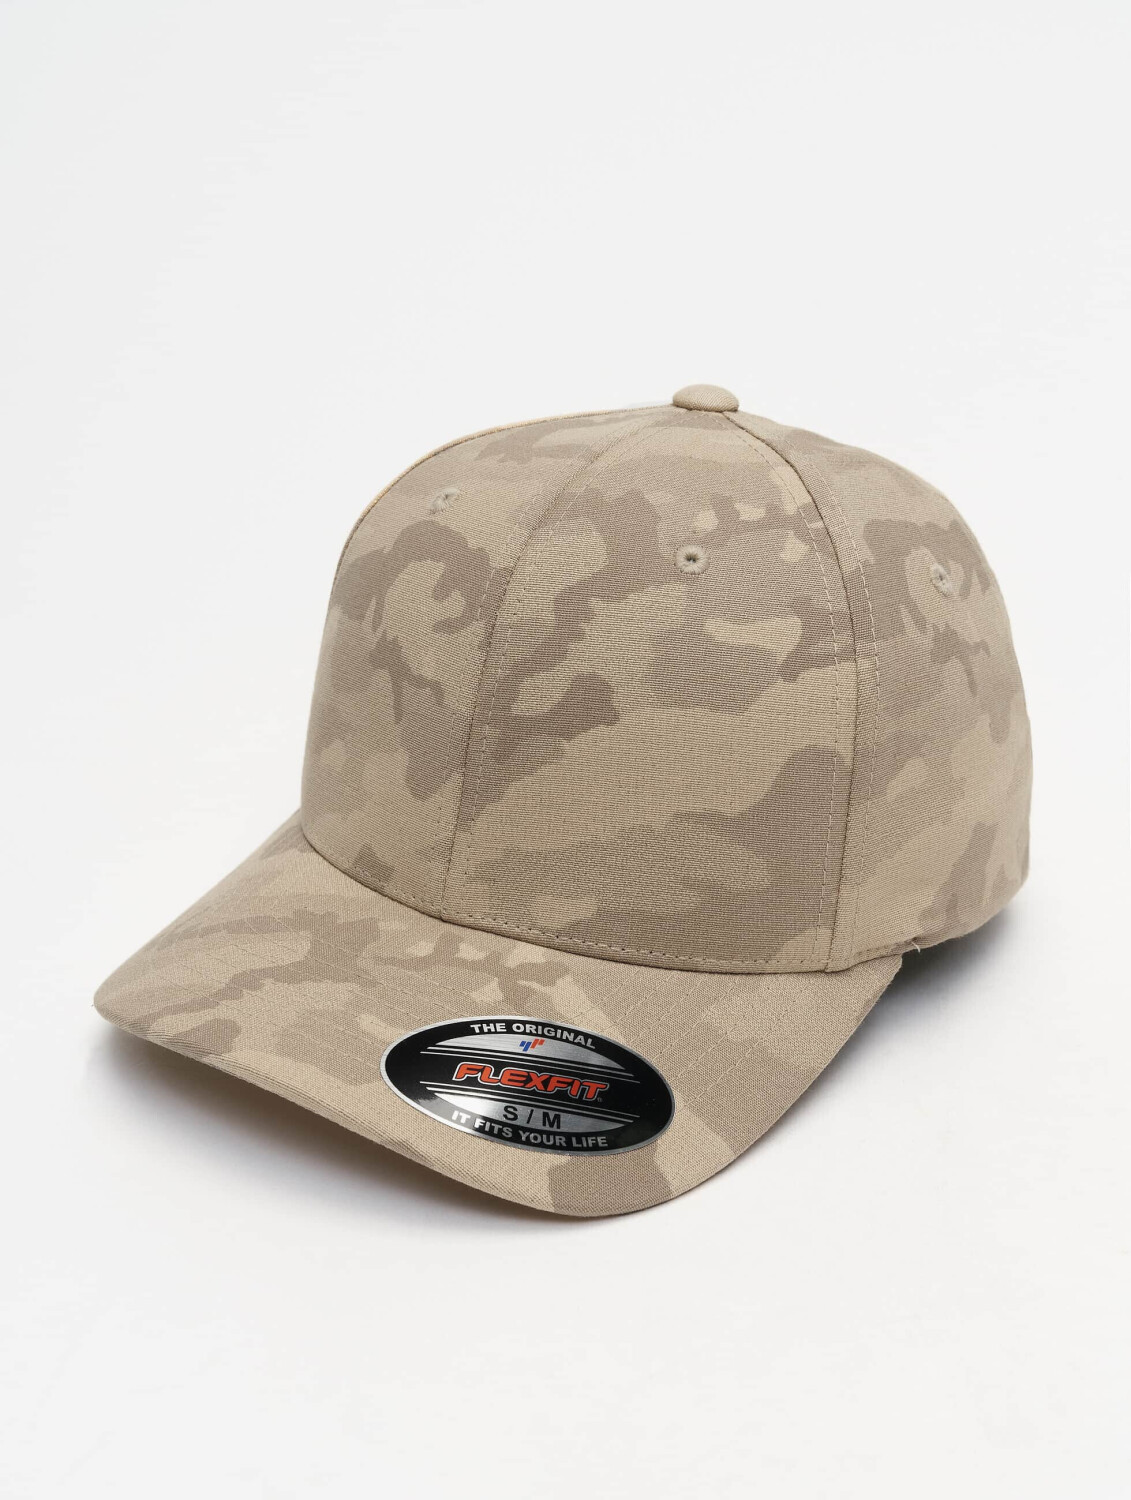 Flexfit Flexfitted Cap camouflage 12,99 | Preisvergleich (6277LCCAM01) ab Light Camo € bei